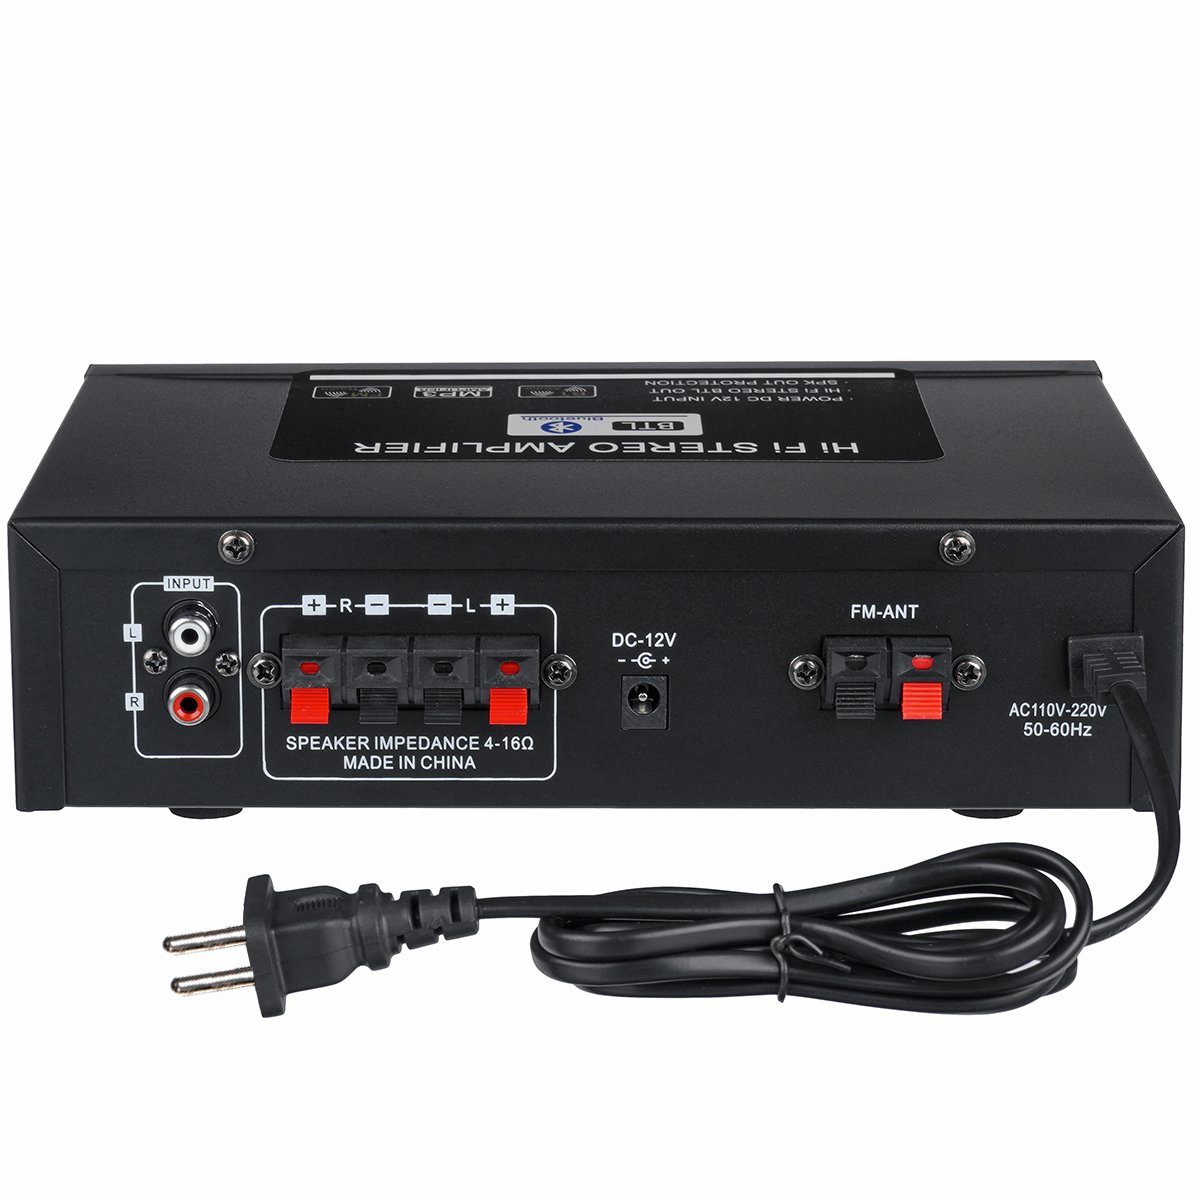 Insma Audioverstärker (Stereo Hifi Verstärker für bluetooth Amplifier Auto/Haus)